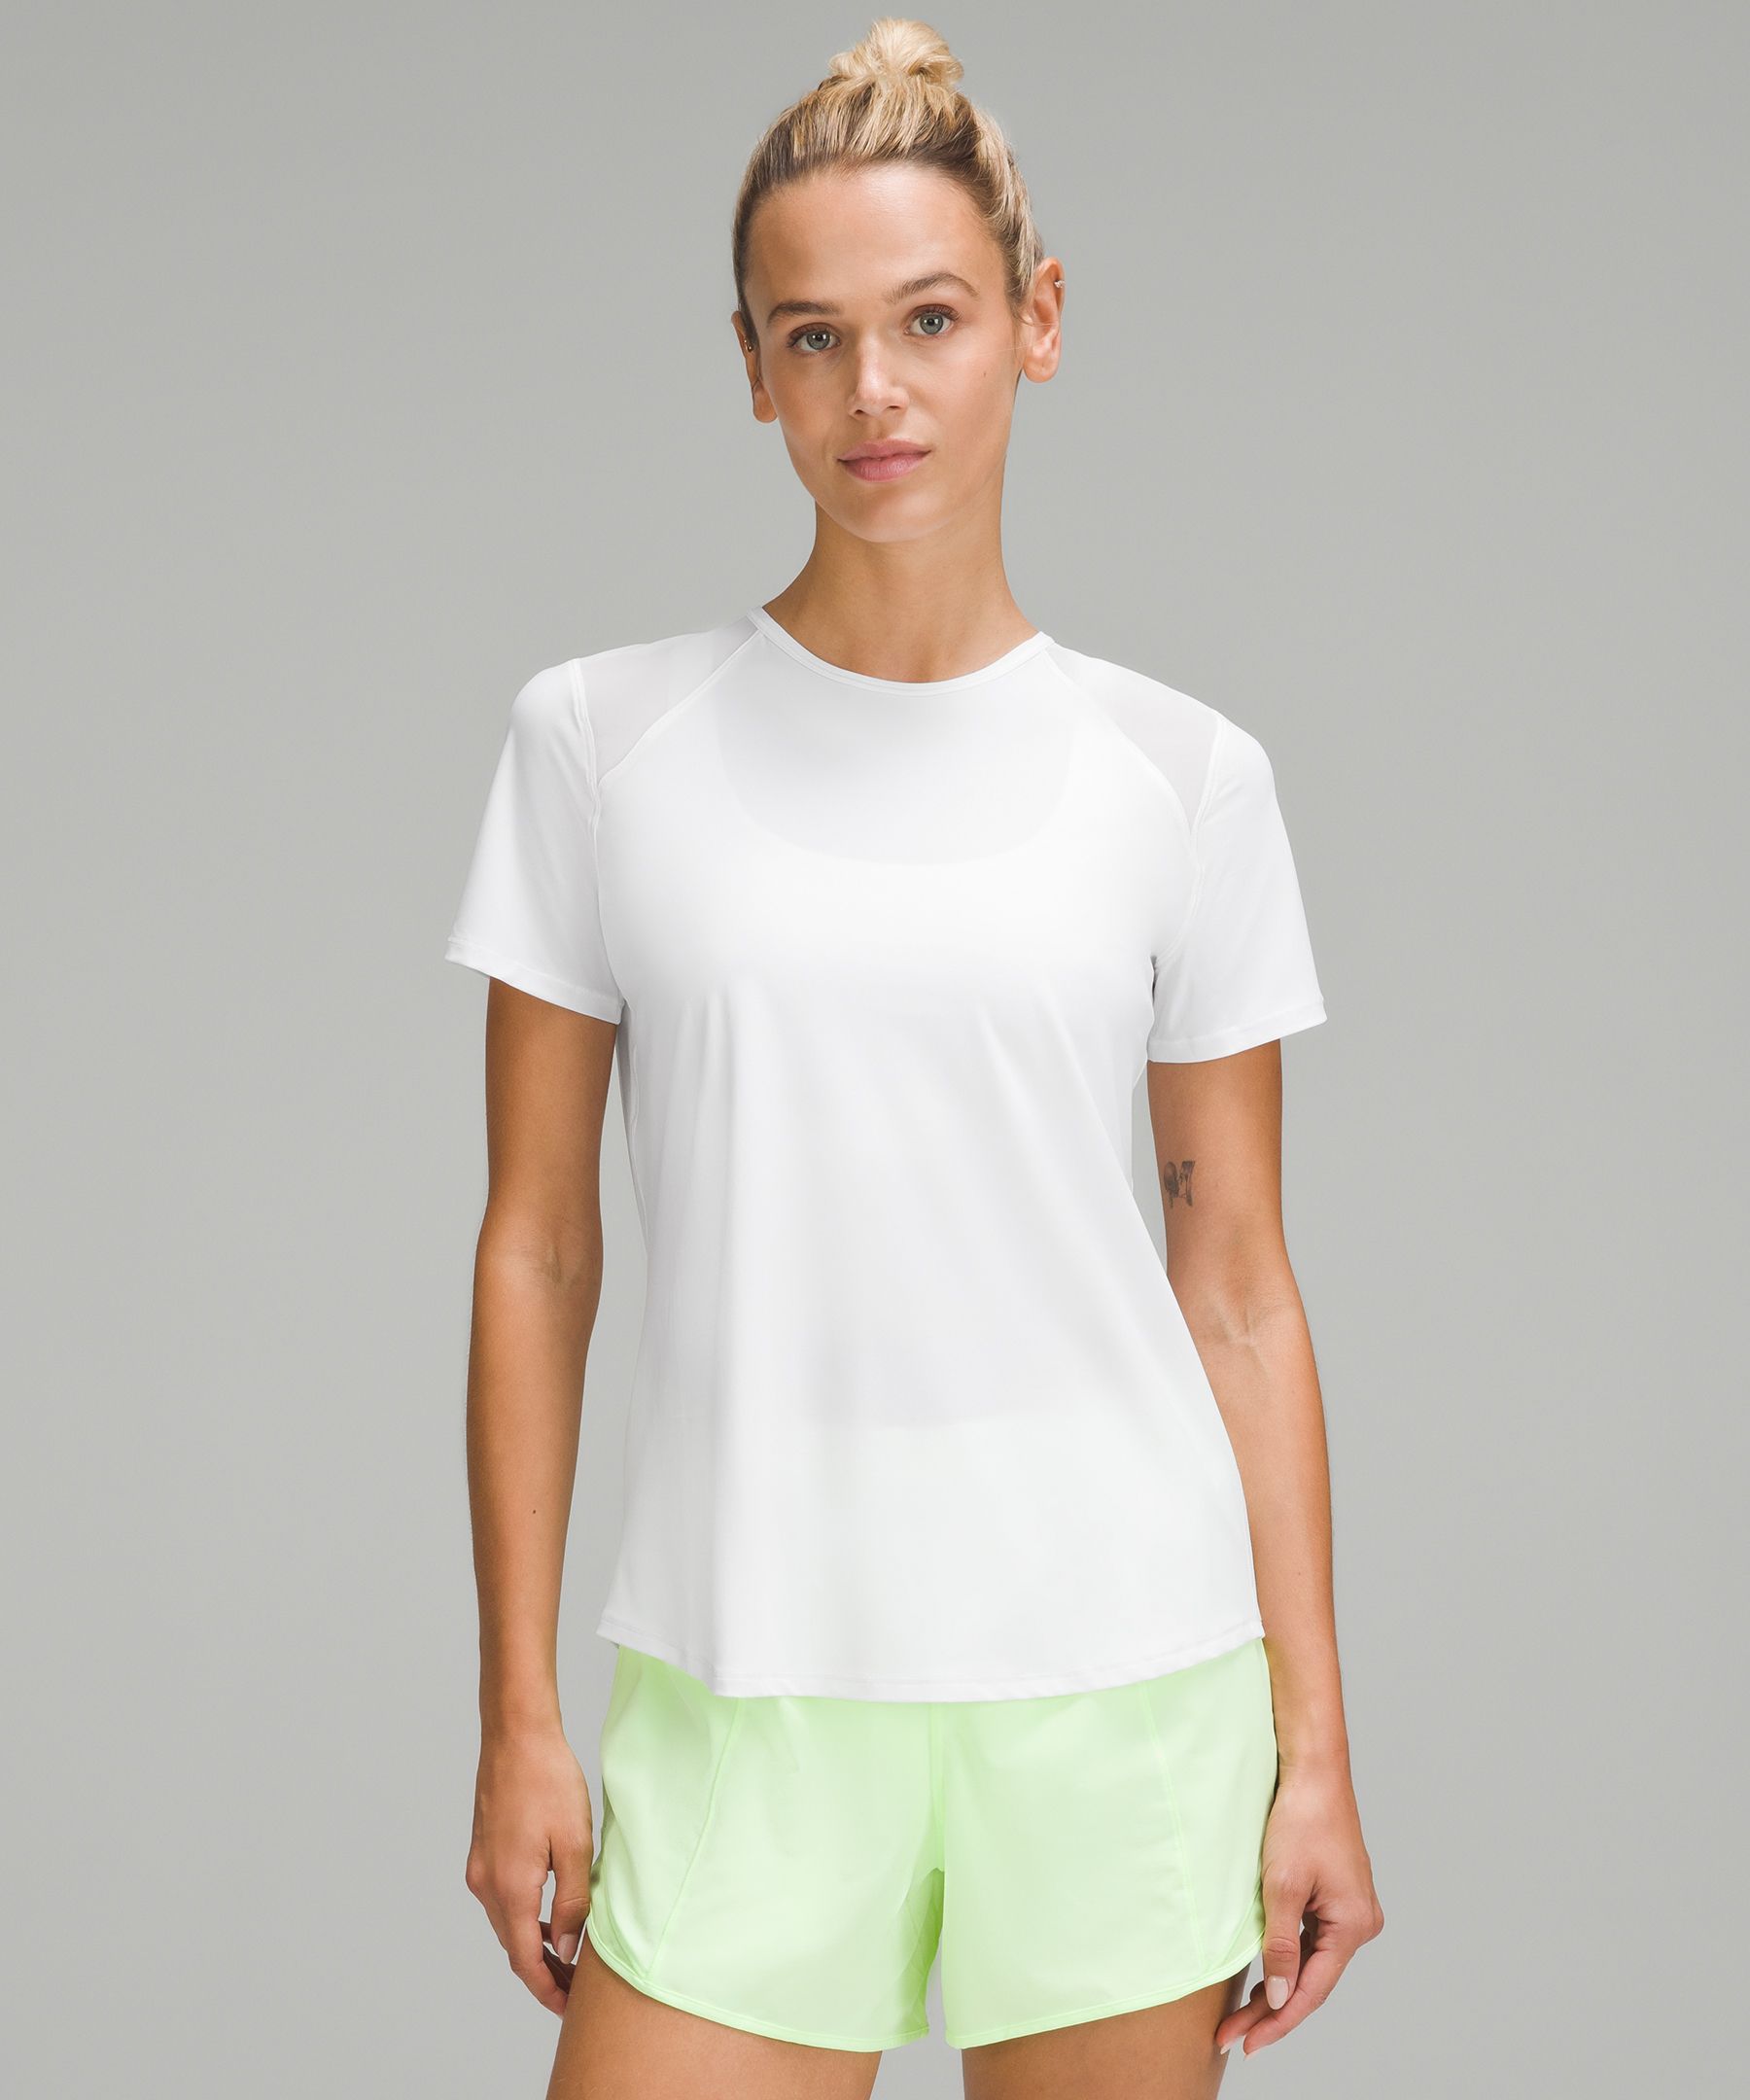 Lululemon athletica Ultralight Reflective Running Short-Sleeve Shirt, Men's Short Sleeve Shirts & Tee's